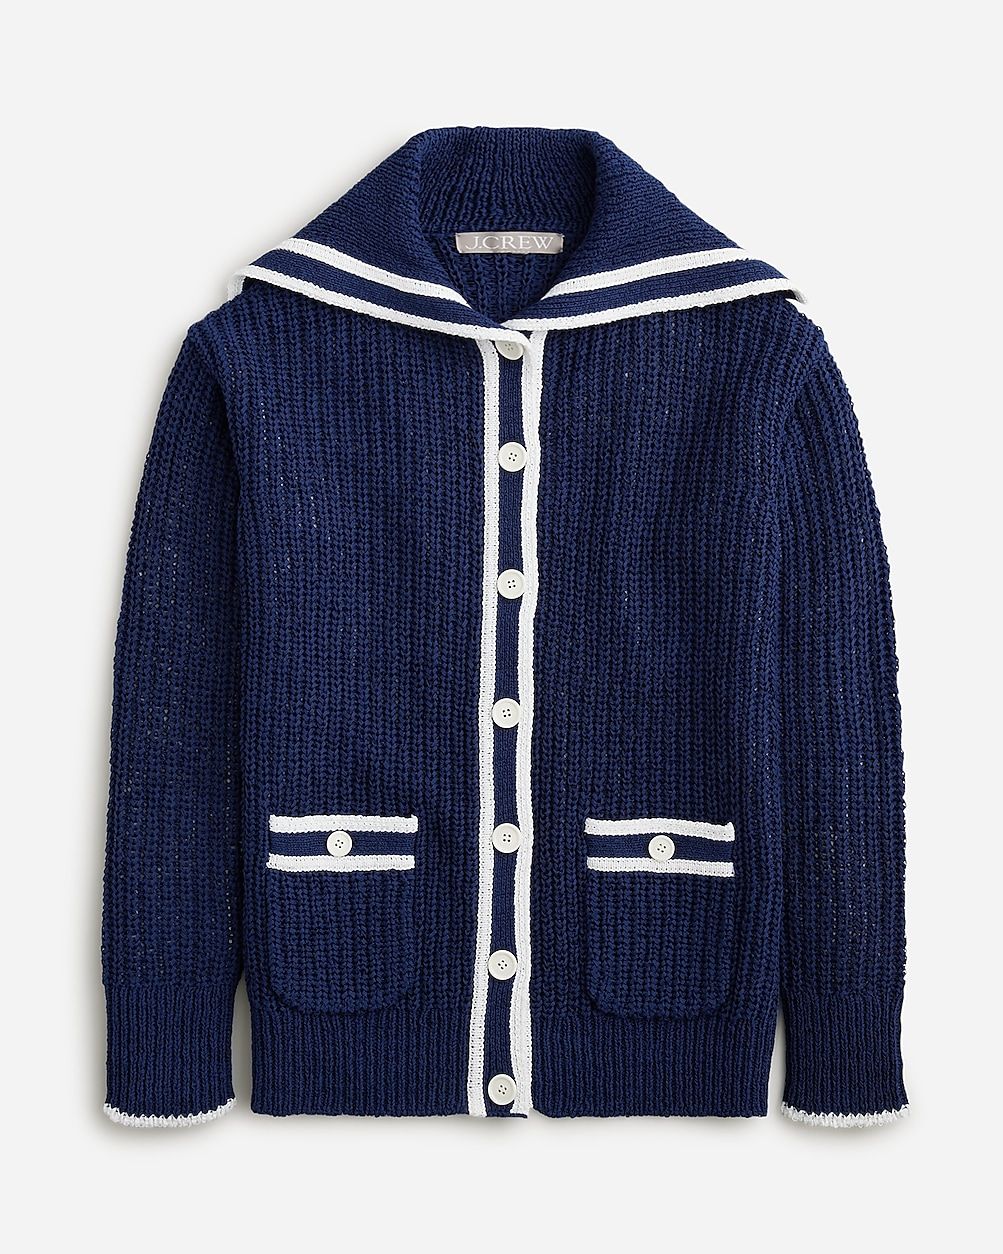 newTextured sailor cardigan sweater$158.0030% off full price with code SHOP30Dark Evening WhiteSe... | J.Crew US